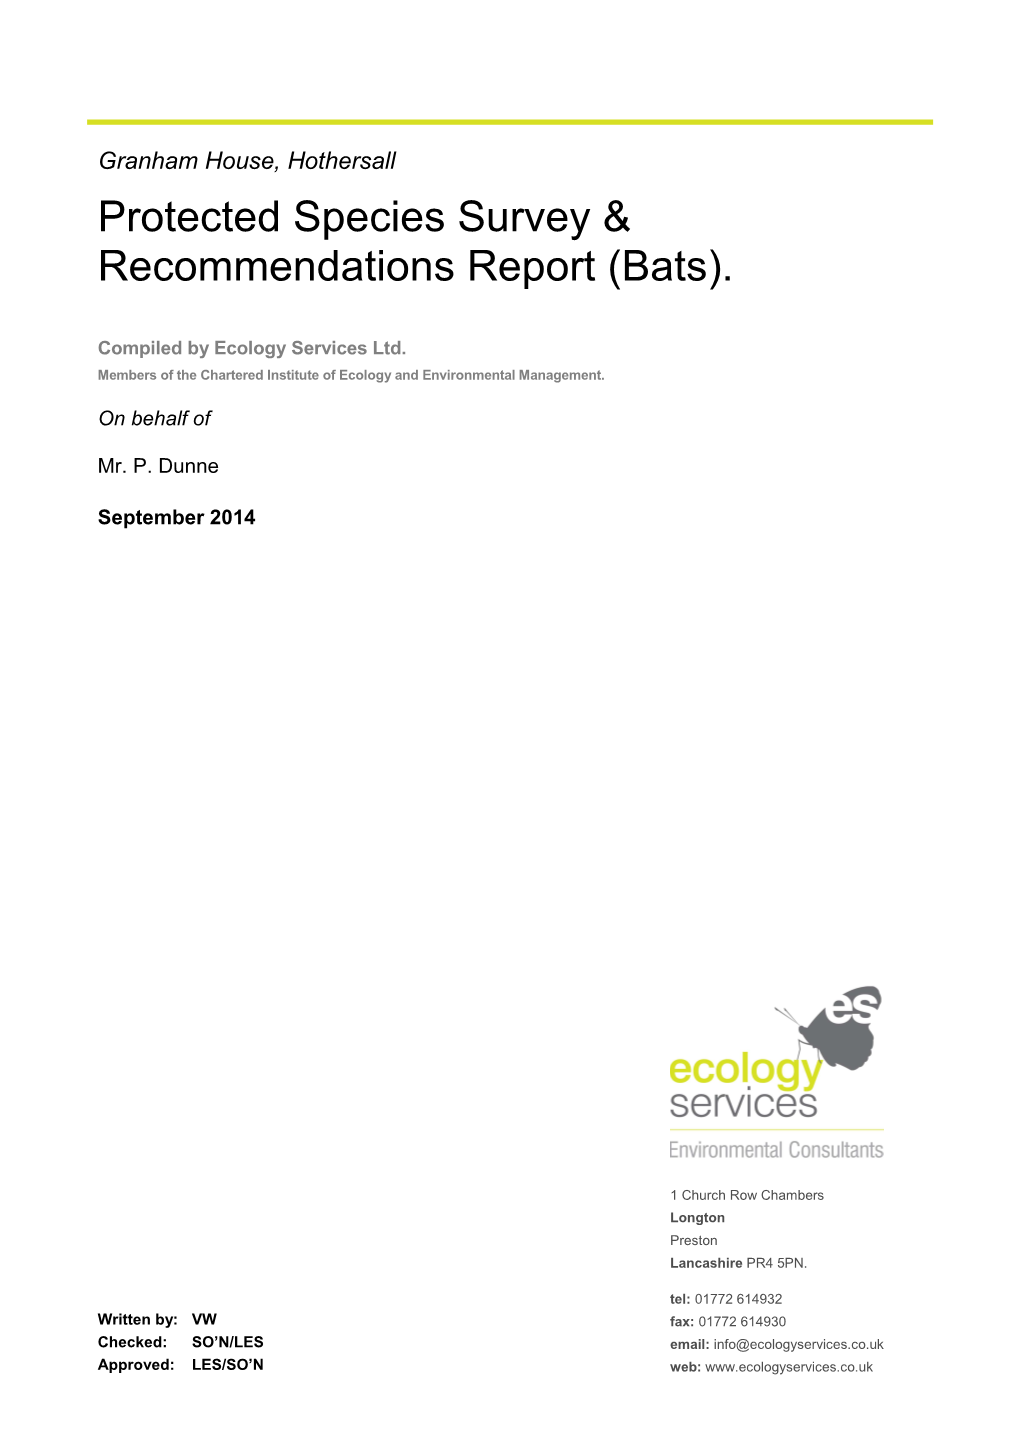 Protected Species Survey & Recommendations Report (Bats)